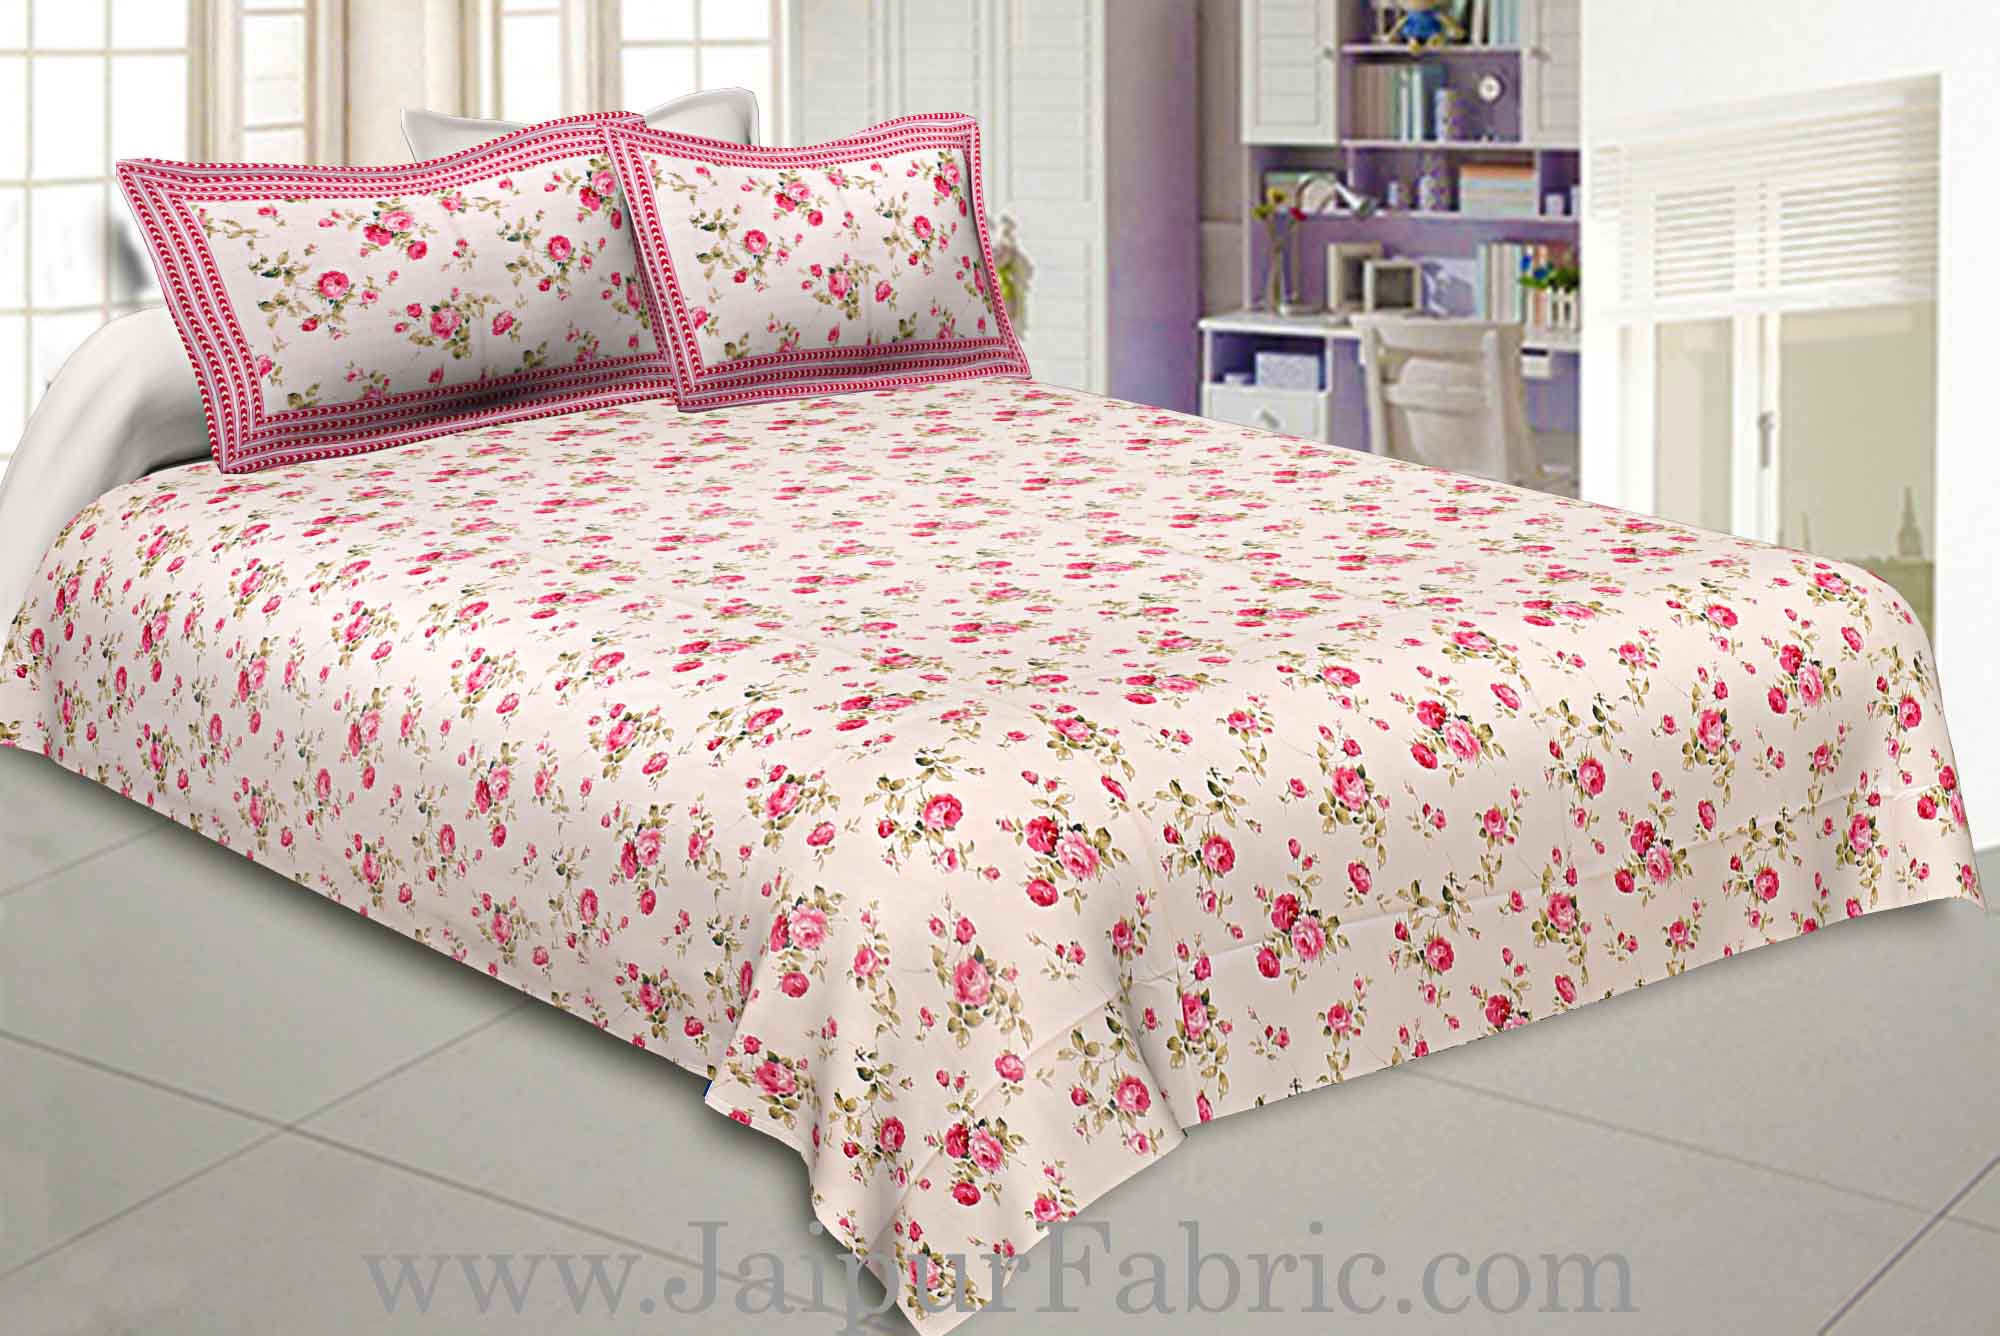 COMBO66 Pink Floral Design 1 Cotton Double Bedsheet + 1 Dohar Combo